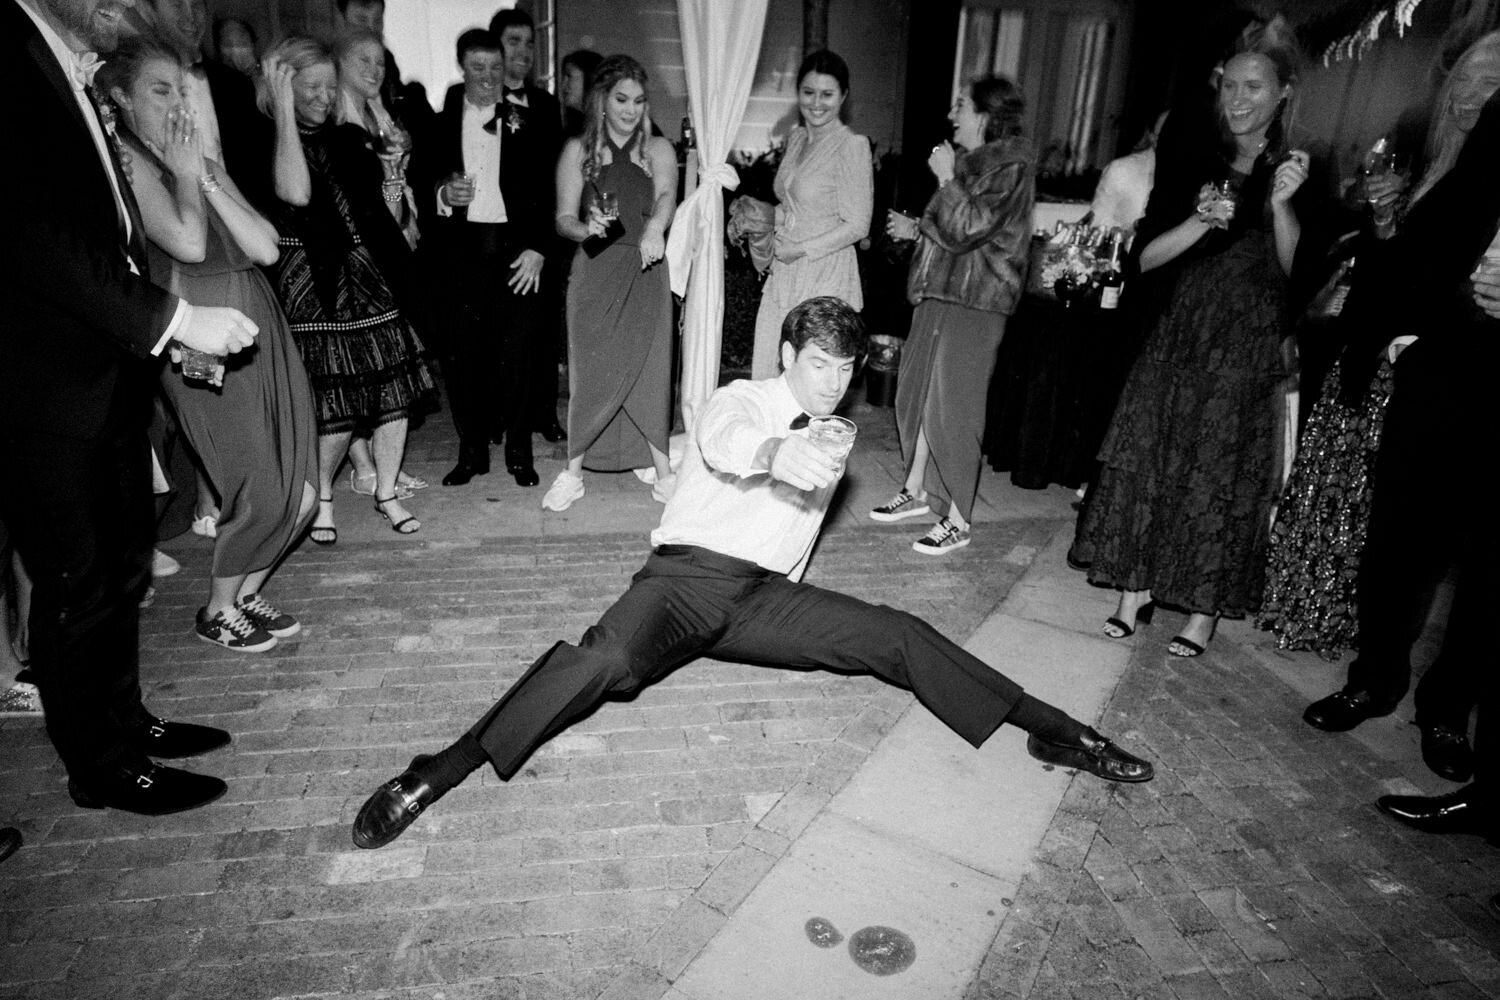 a groomsman dances during wedding reception